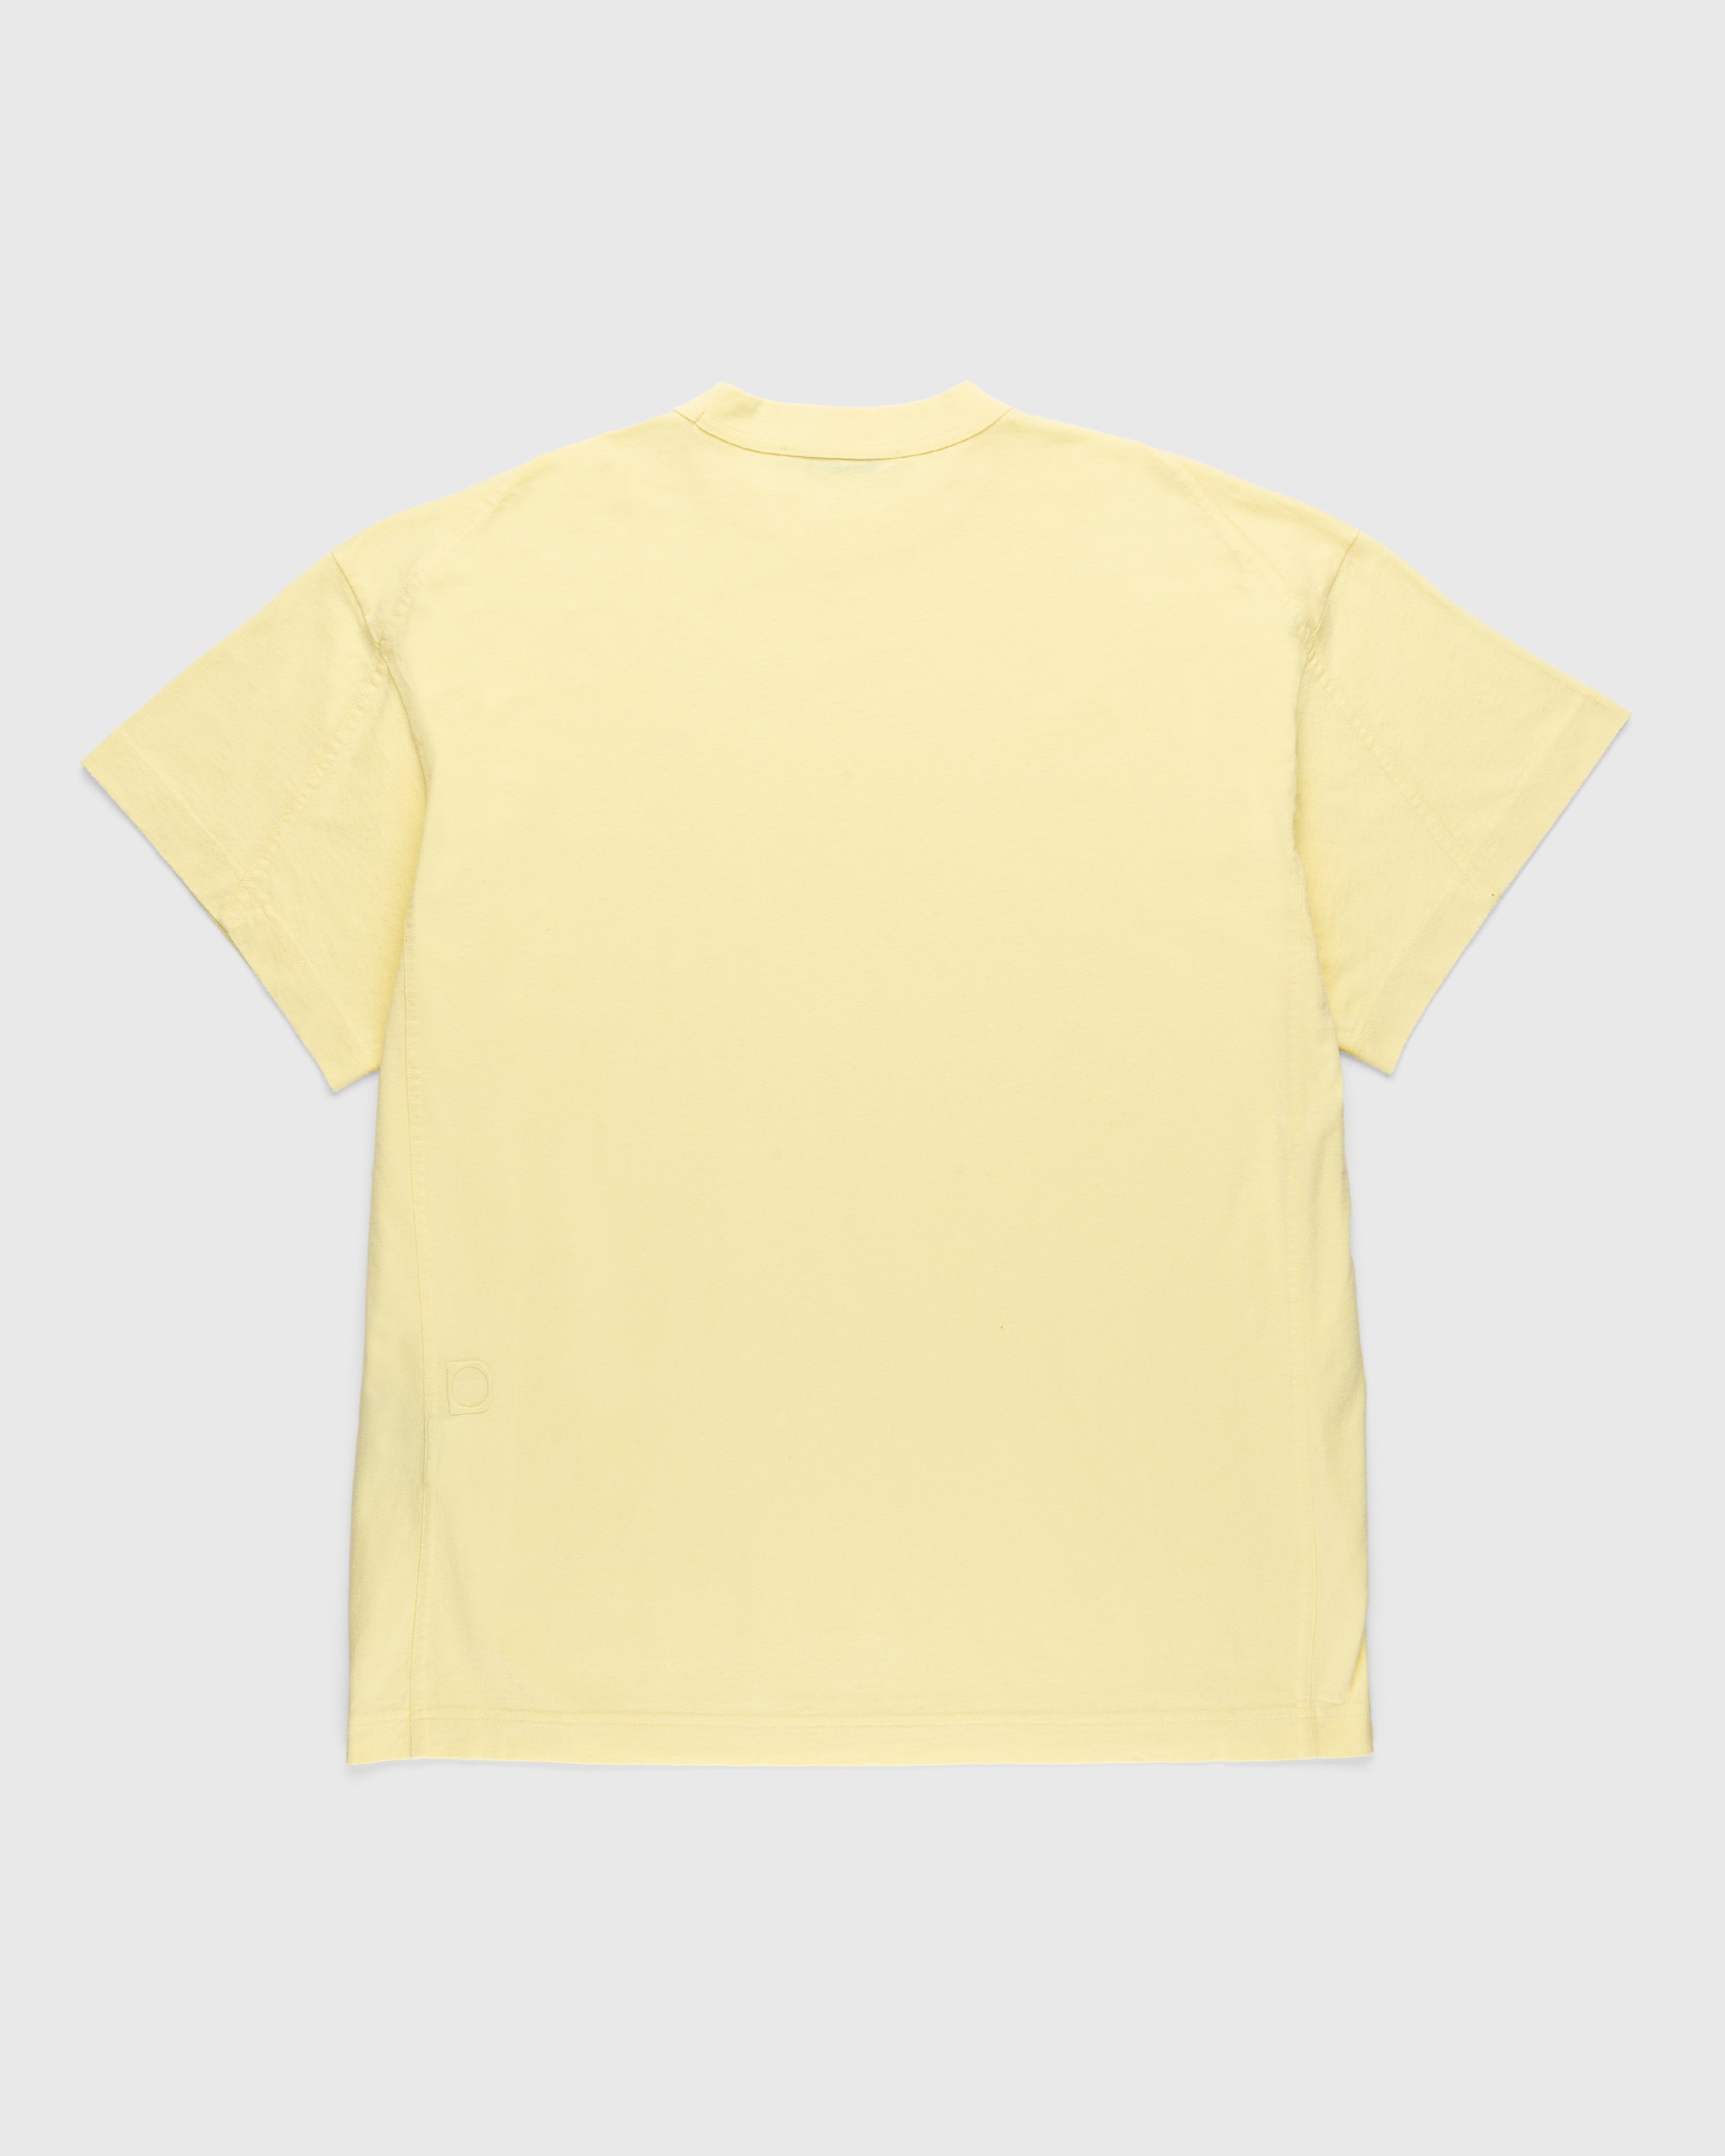 Diomene by Damir Doma - Cotton Crewneck T-Shirt Lemonade - Clothing - Yellow - Image 2